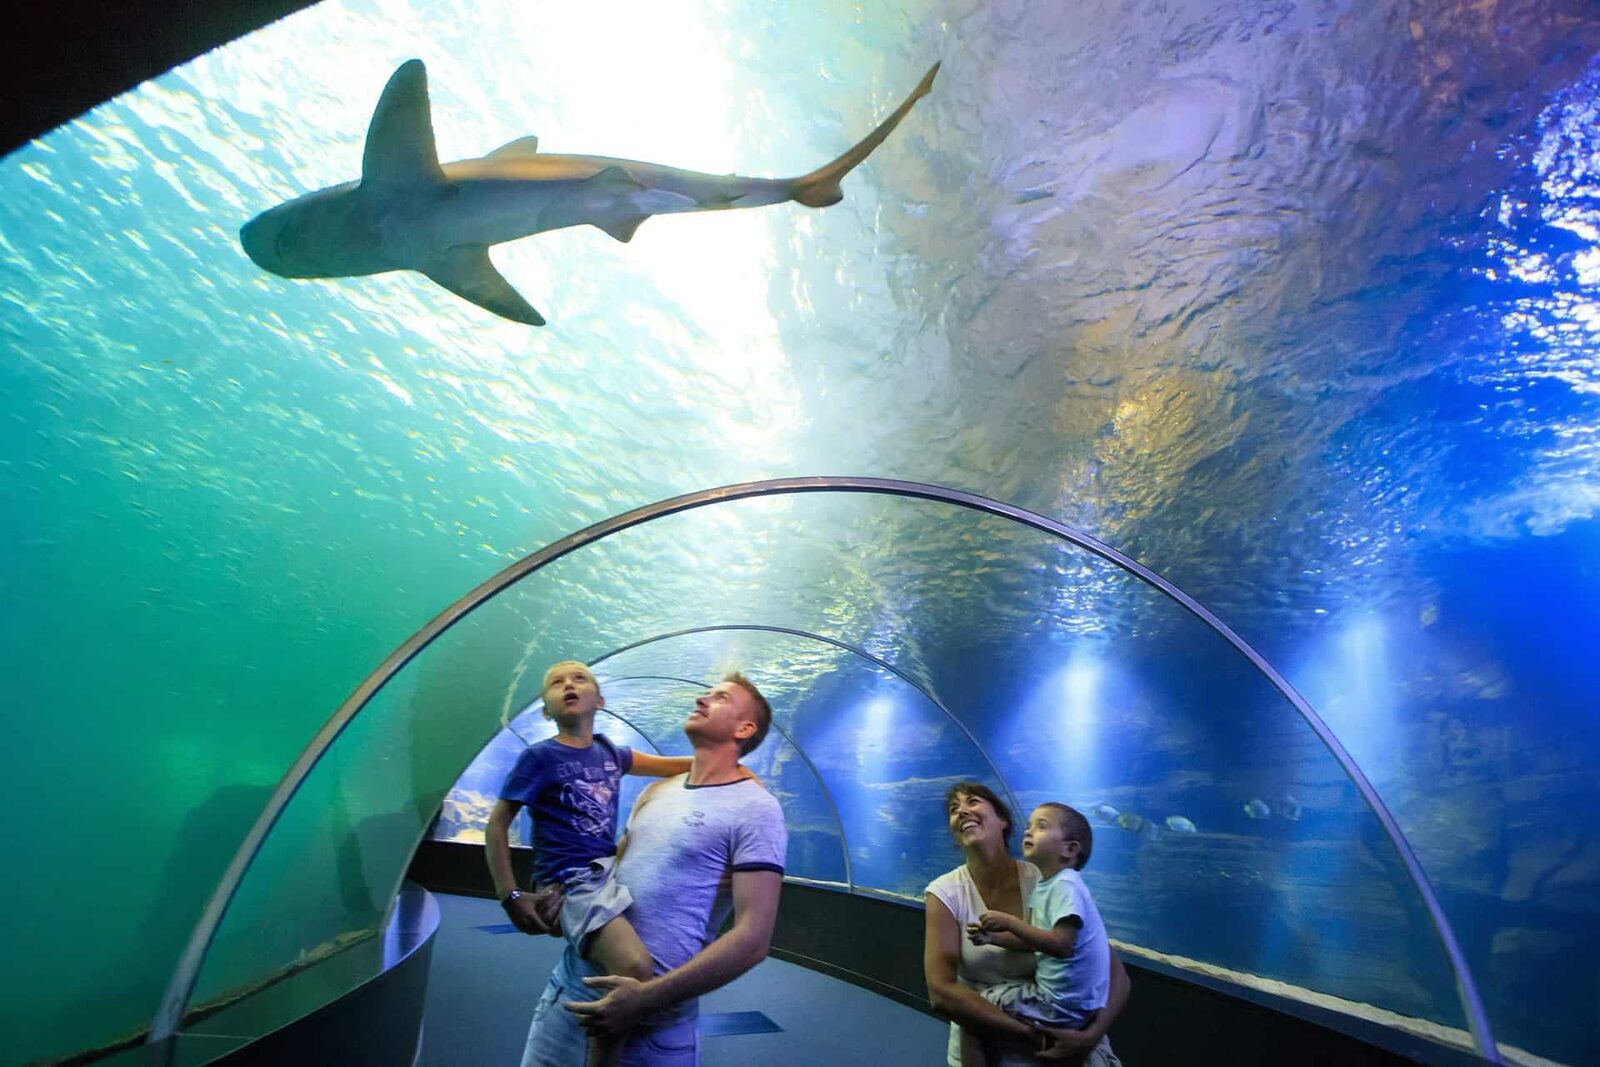 Nausicaá: the largest aquarium in Europe in Boulogne-sur-Mer